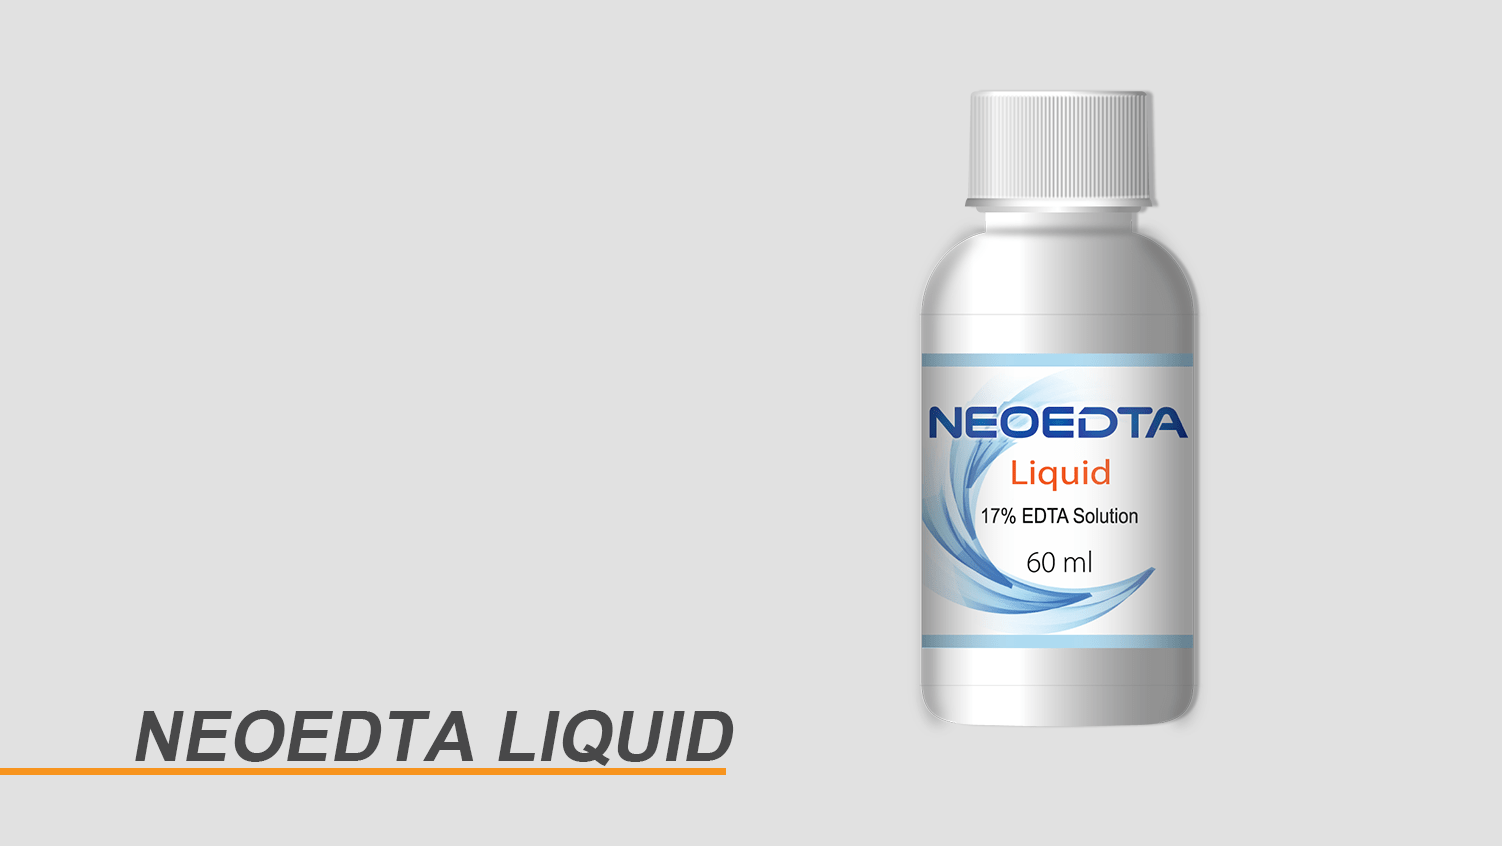 Orikam NeoEndo NeoEdta Liquid 17% Chelating Agent 60ml